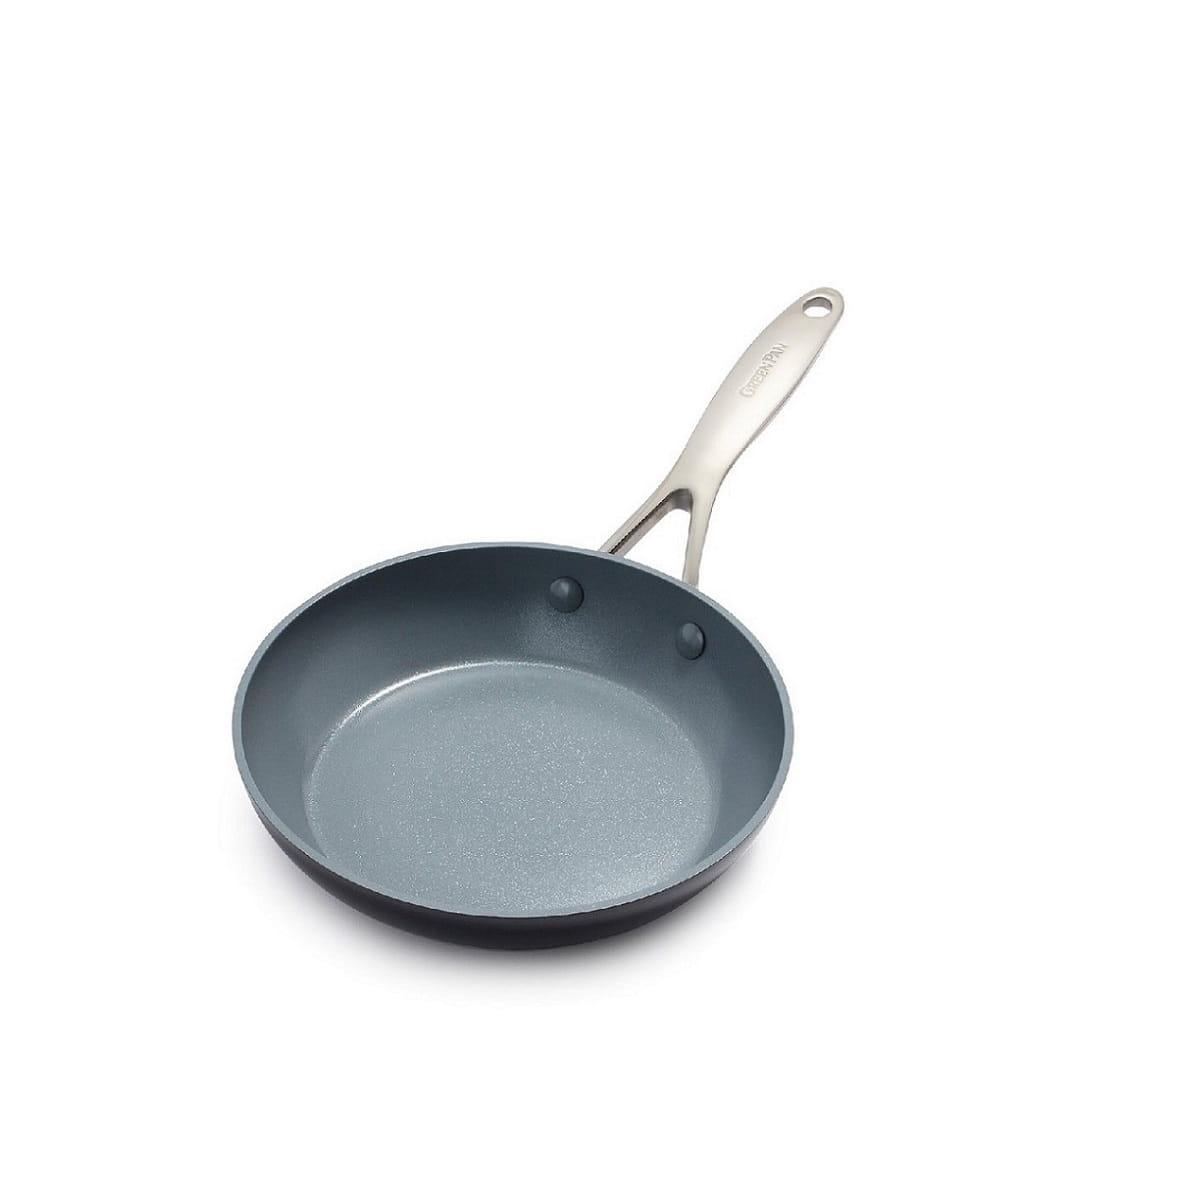 CC002677-001 - Valencia Frying Pan, Dark Grey - 20cm - Product Image 1